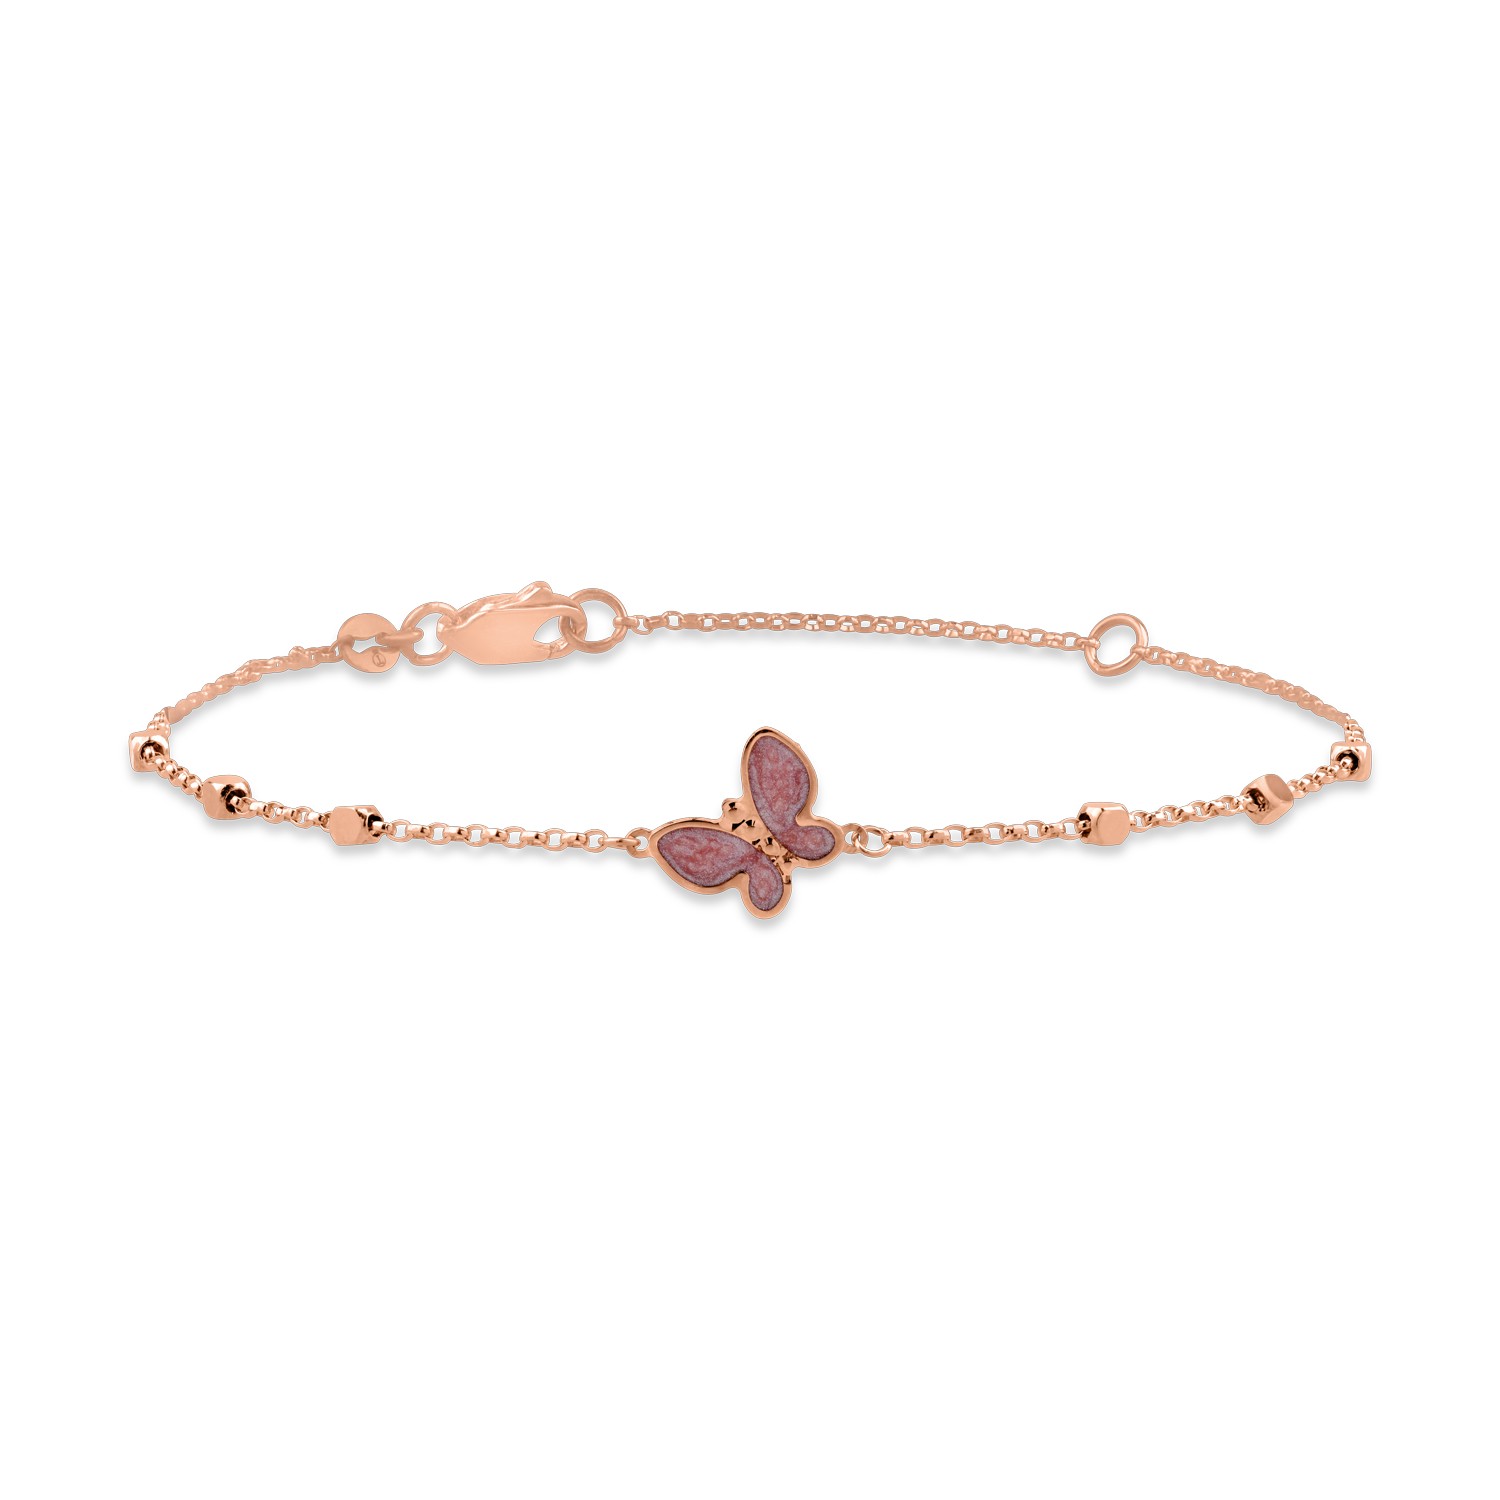 Rose gold bracelet with butterfly pendant